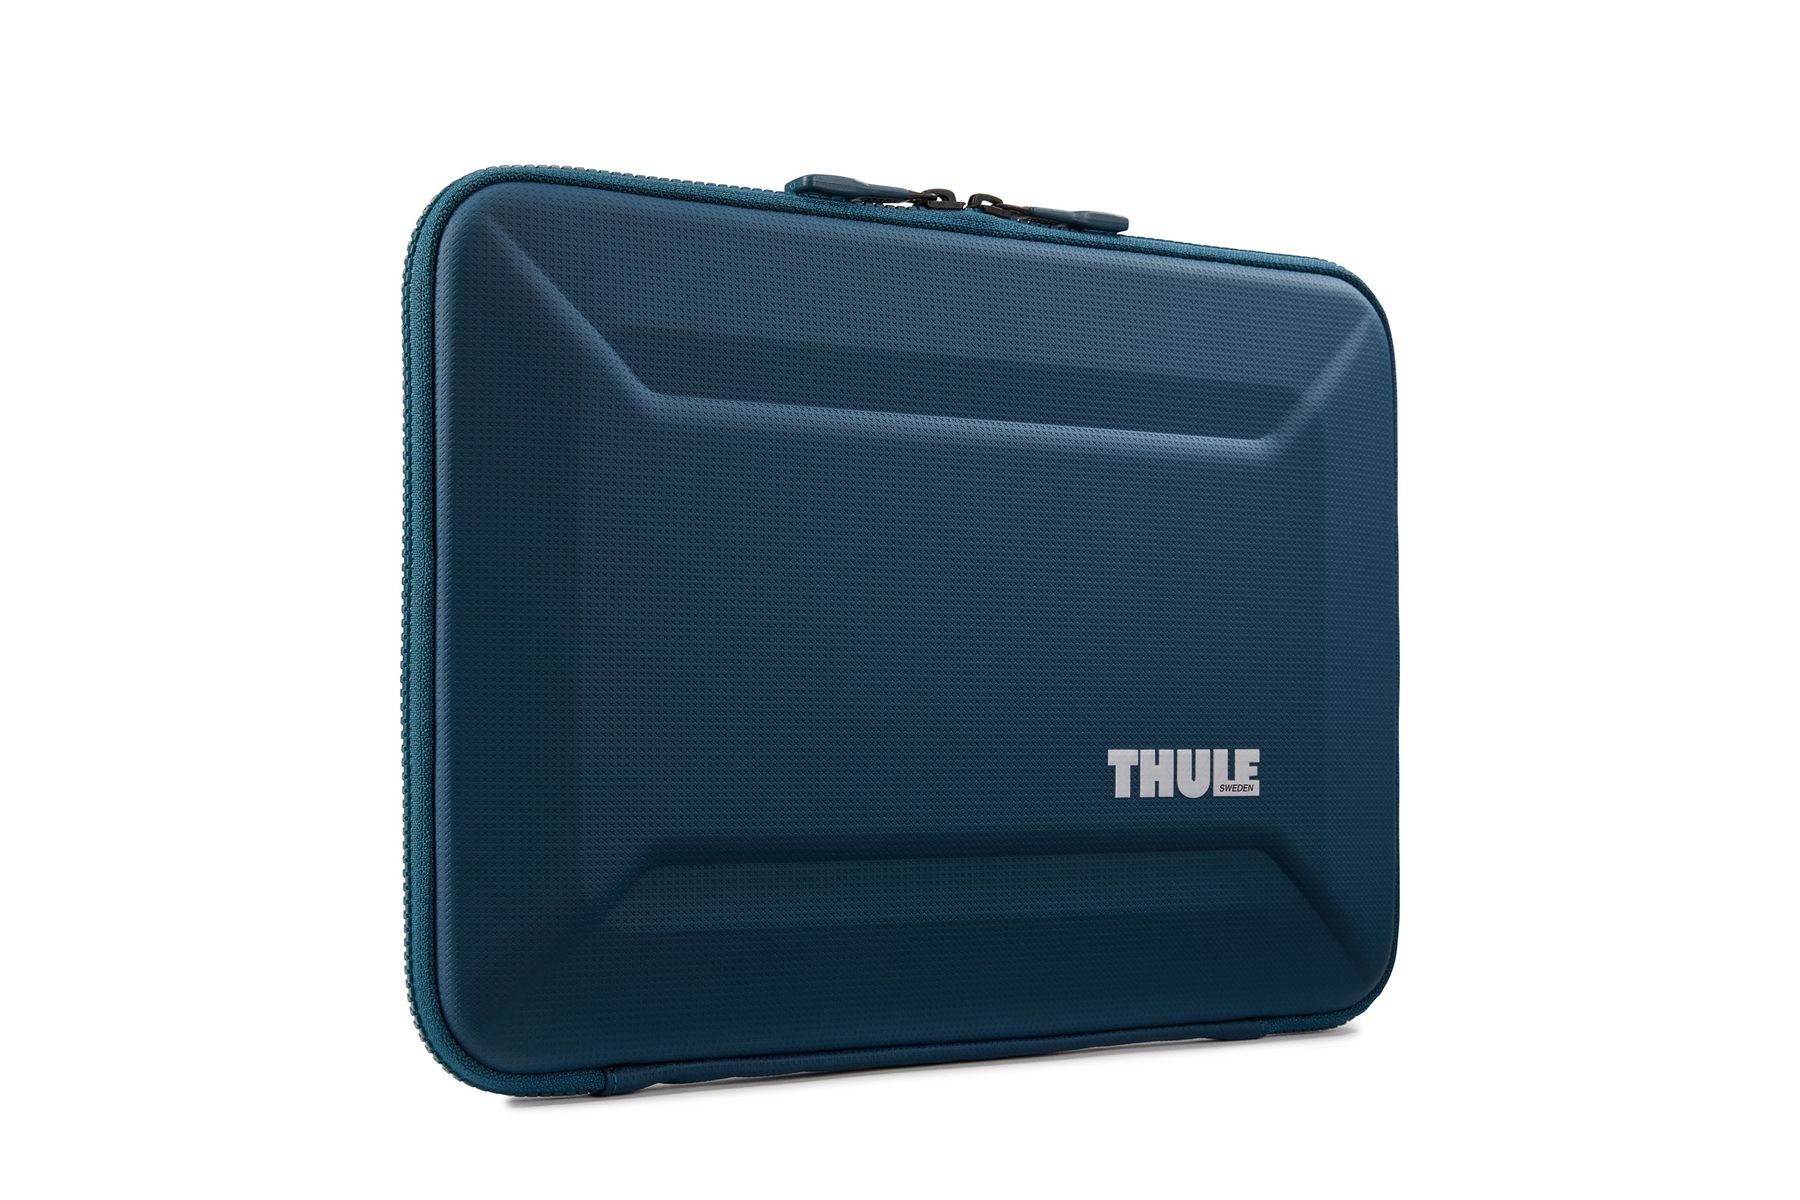 Thule Gauntlet 4 MacBook Pro Sleeve 14" Feature 3 Majolica Blue